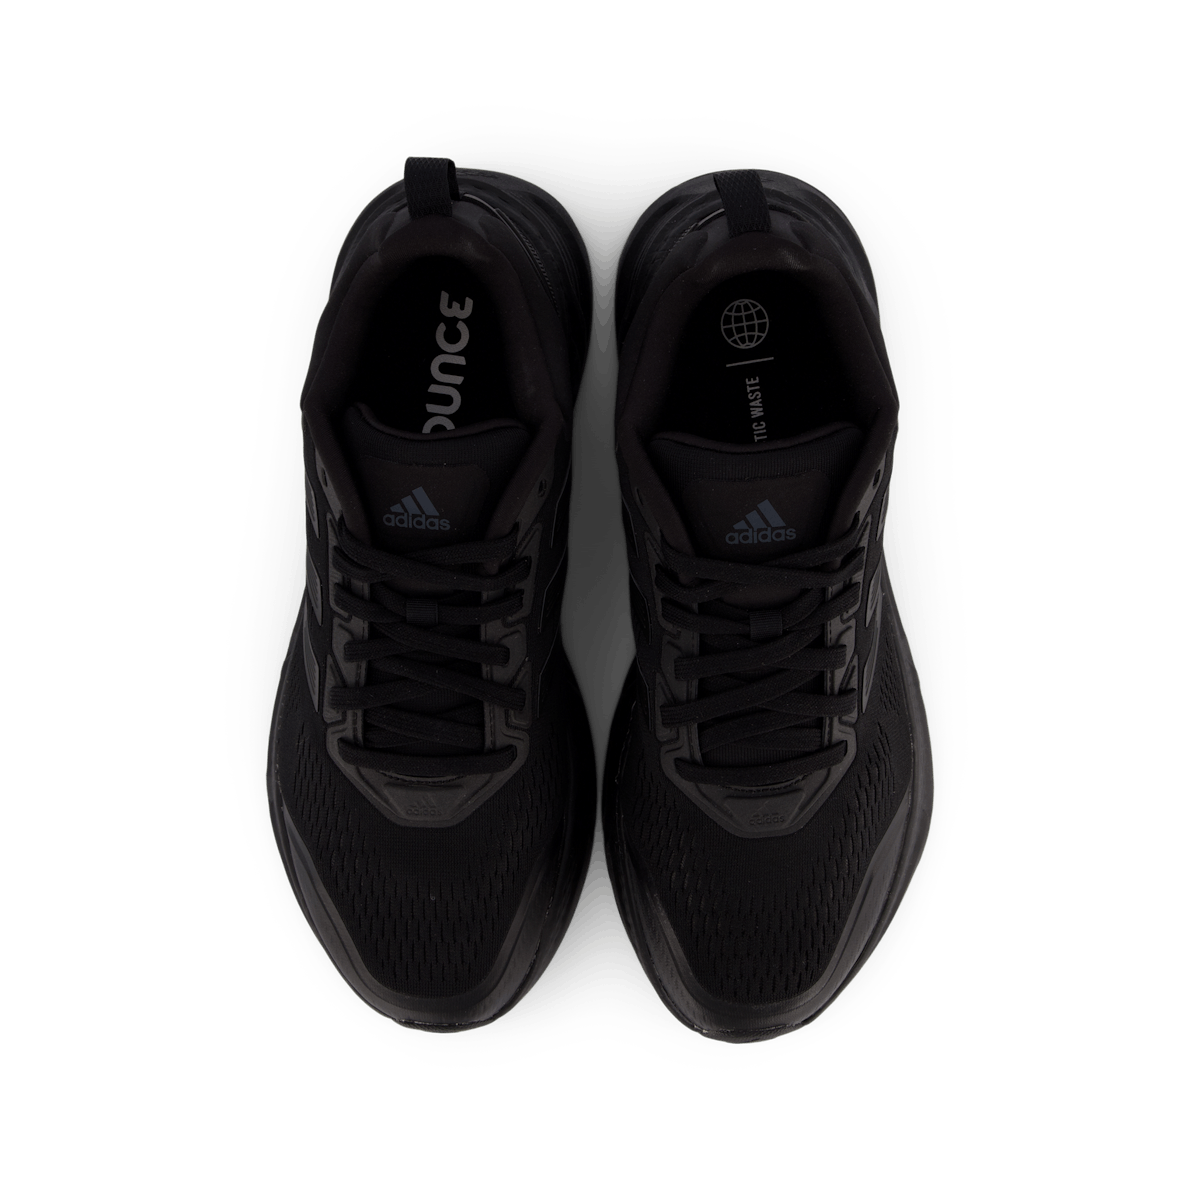 Questar Shoes Core Black / Carbon / Grey Six